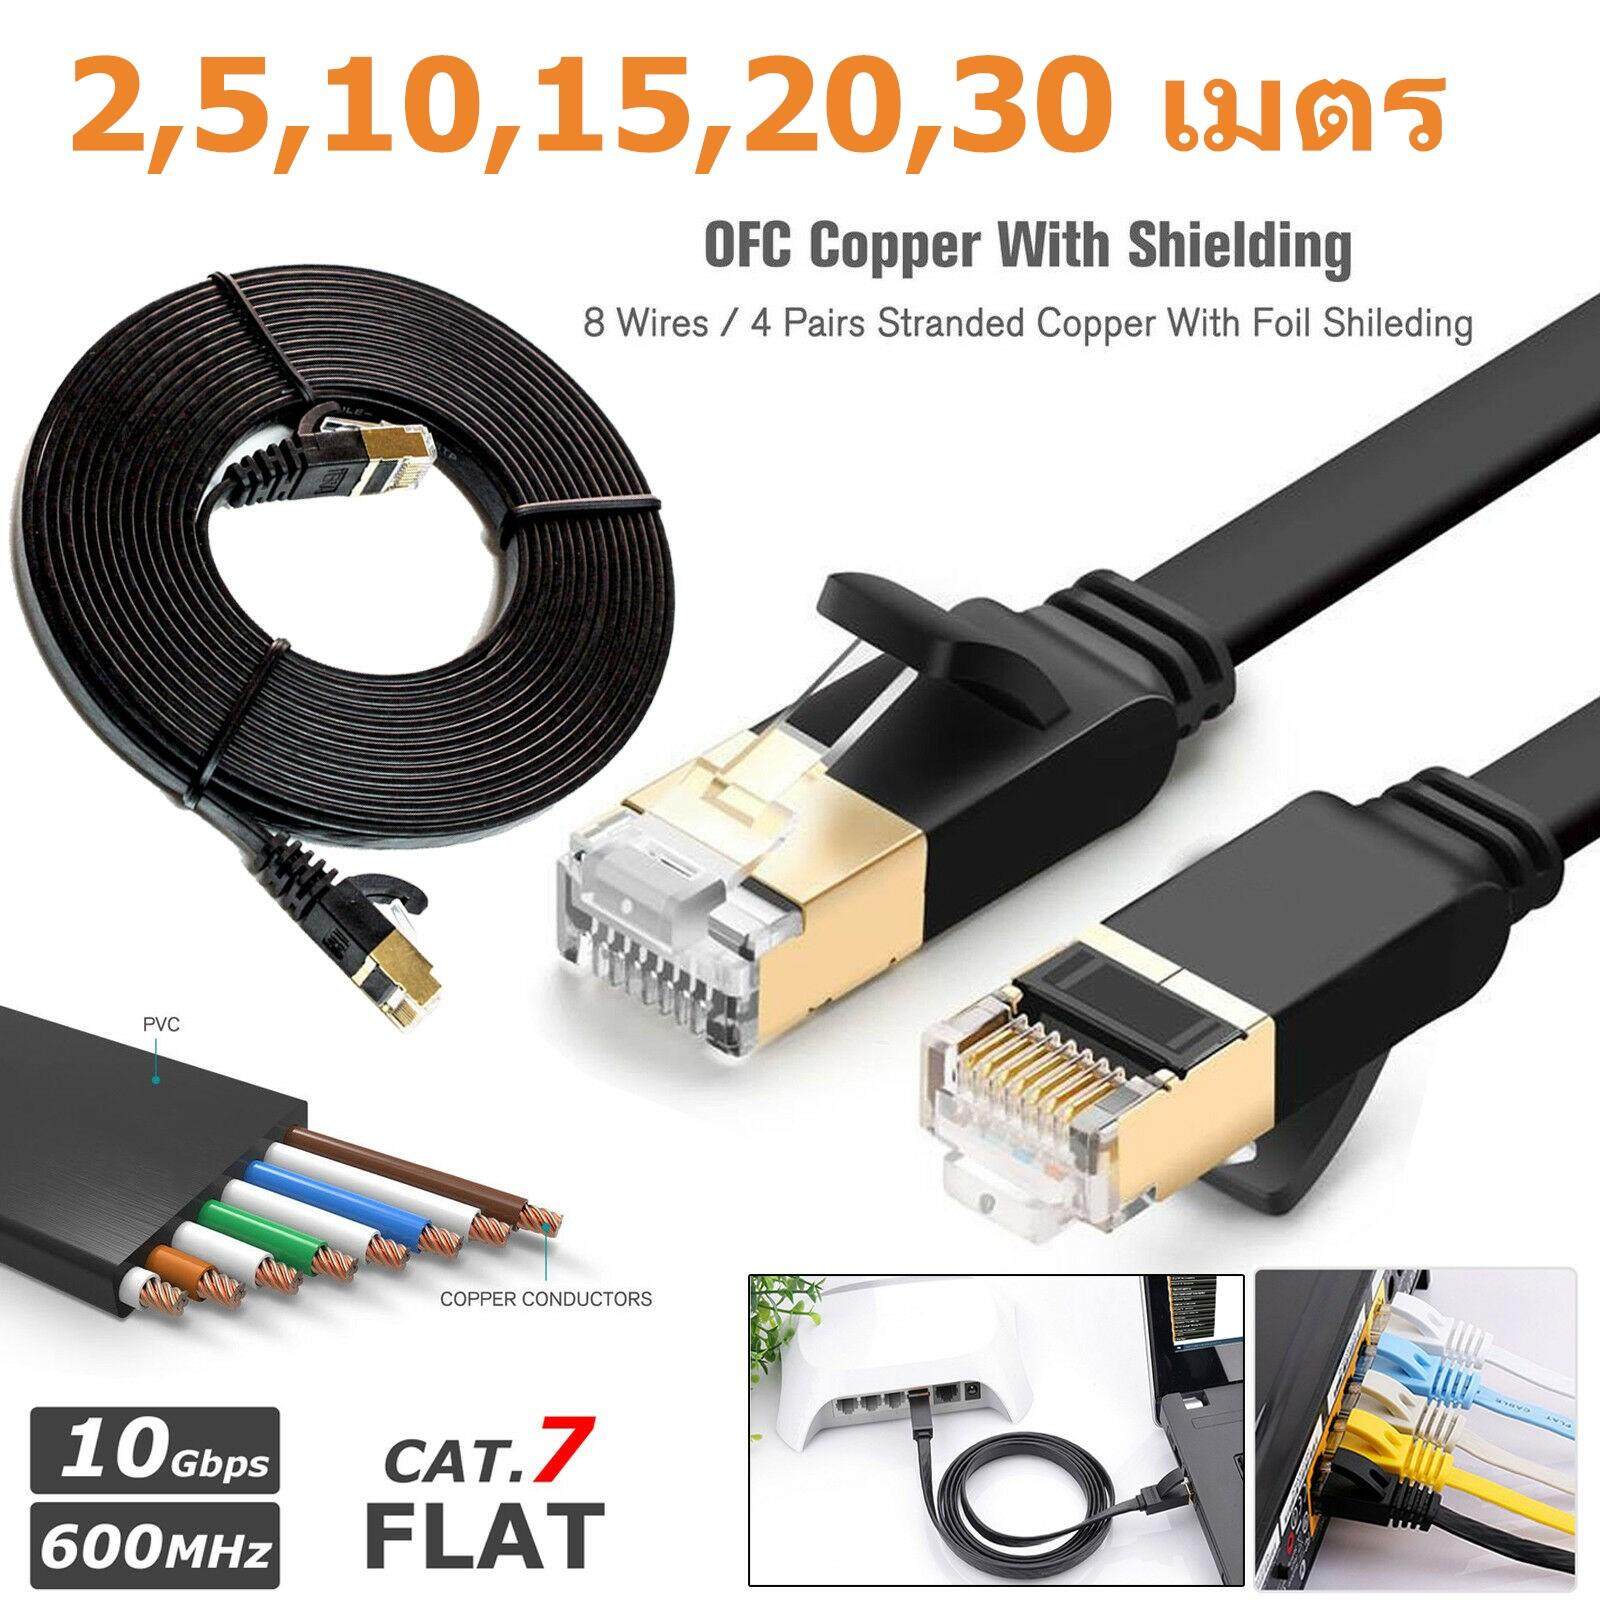 Cat7 RJ45 Ethernet Network Cable Cat7 Lead 10Gbp 600Mhz LAN UTP Patch Gold plated สายแลนสำเร็จรูปพร้อมใช้งาน ยาว 2เมตร 5เมตร 10เมตร 15เมตร 20เมตร 30เมตรUTP Cable Cat7e 2M 5M 10M 15M 20M 30M